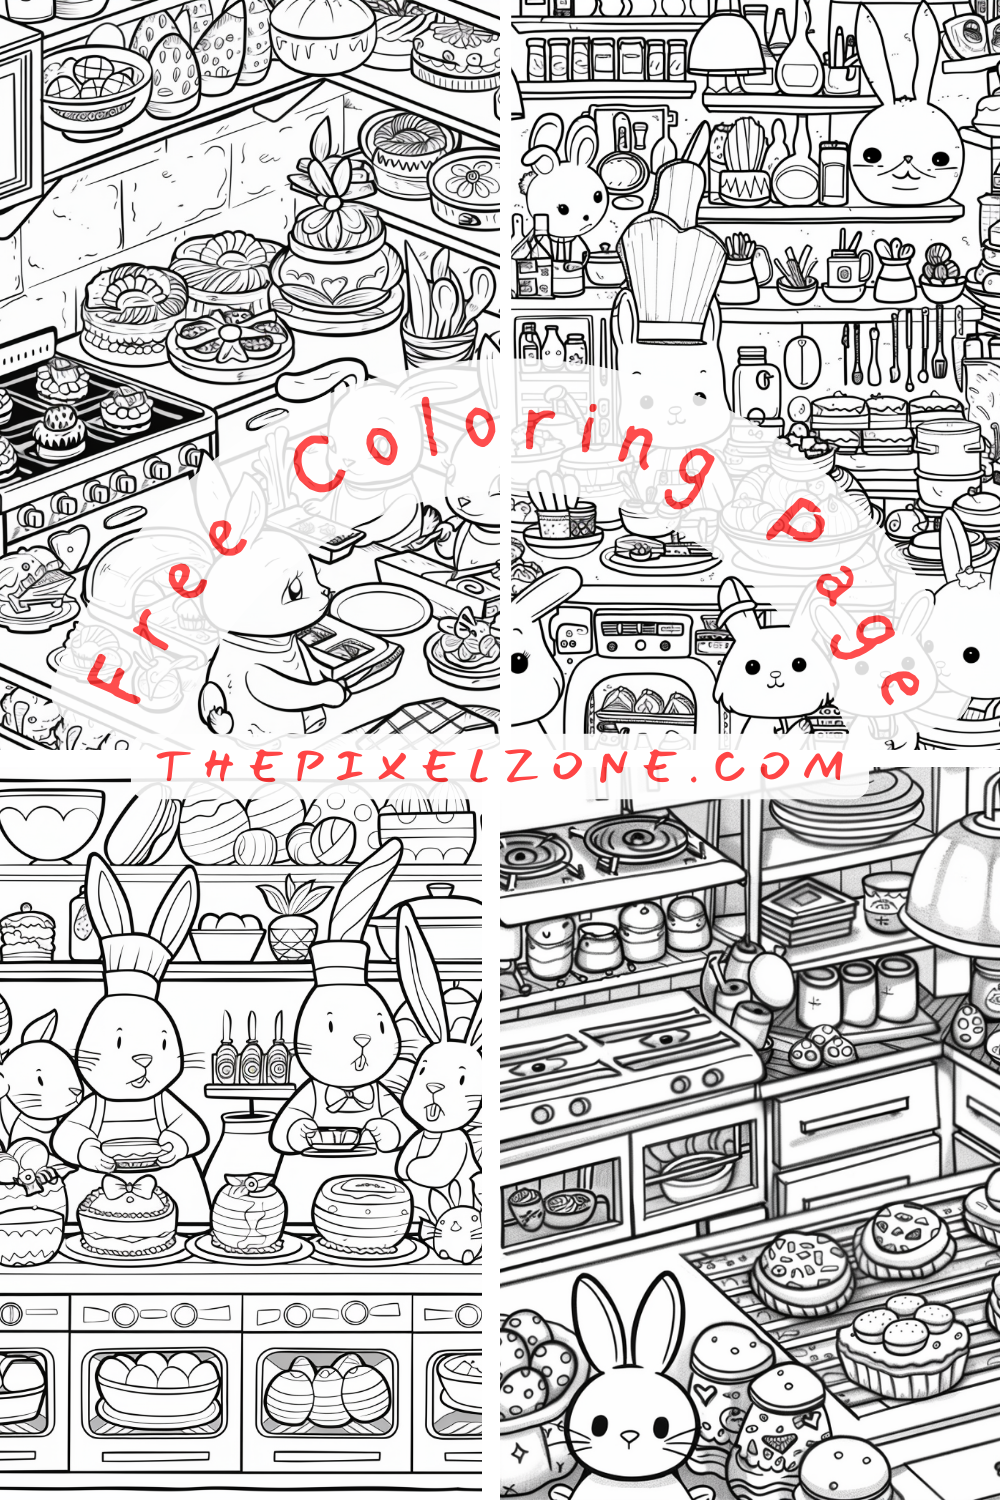 Free Coloring Page | Easter Coloring Page | Kids Coloring Page | Página Para Colorear GRATIS